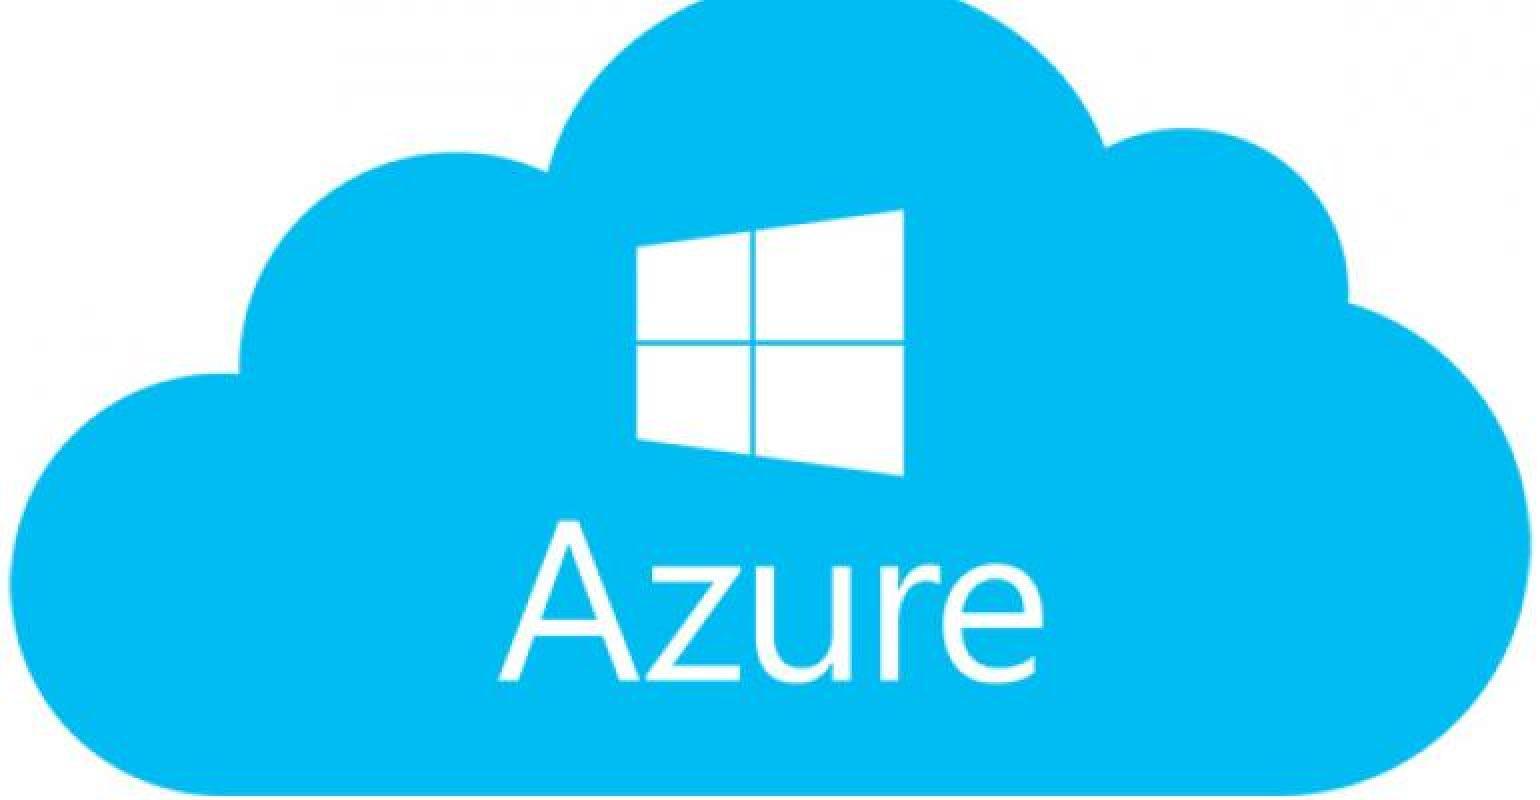 Microsoft Azure training for Beginners in Wilmington | Microsoft Azure Fundamentals | Azure cloud computing training | Microsoft Azure Fundamentals AZ-900 Certification Exam Prep (Preparation) Training Course